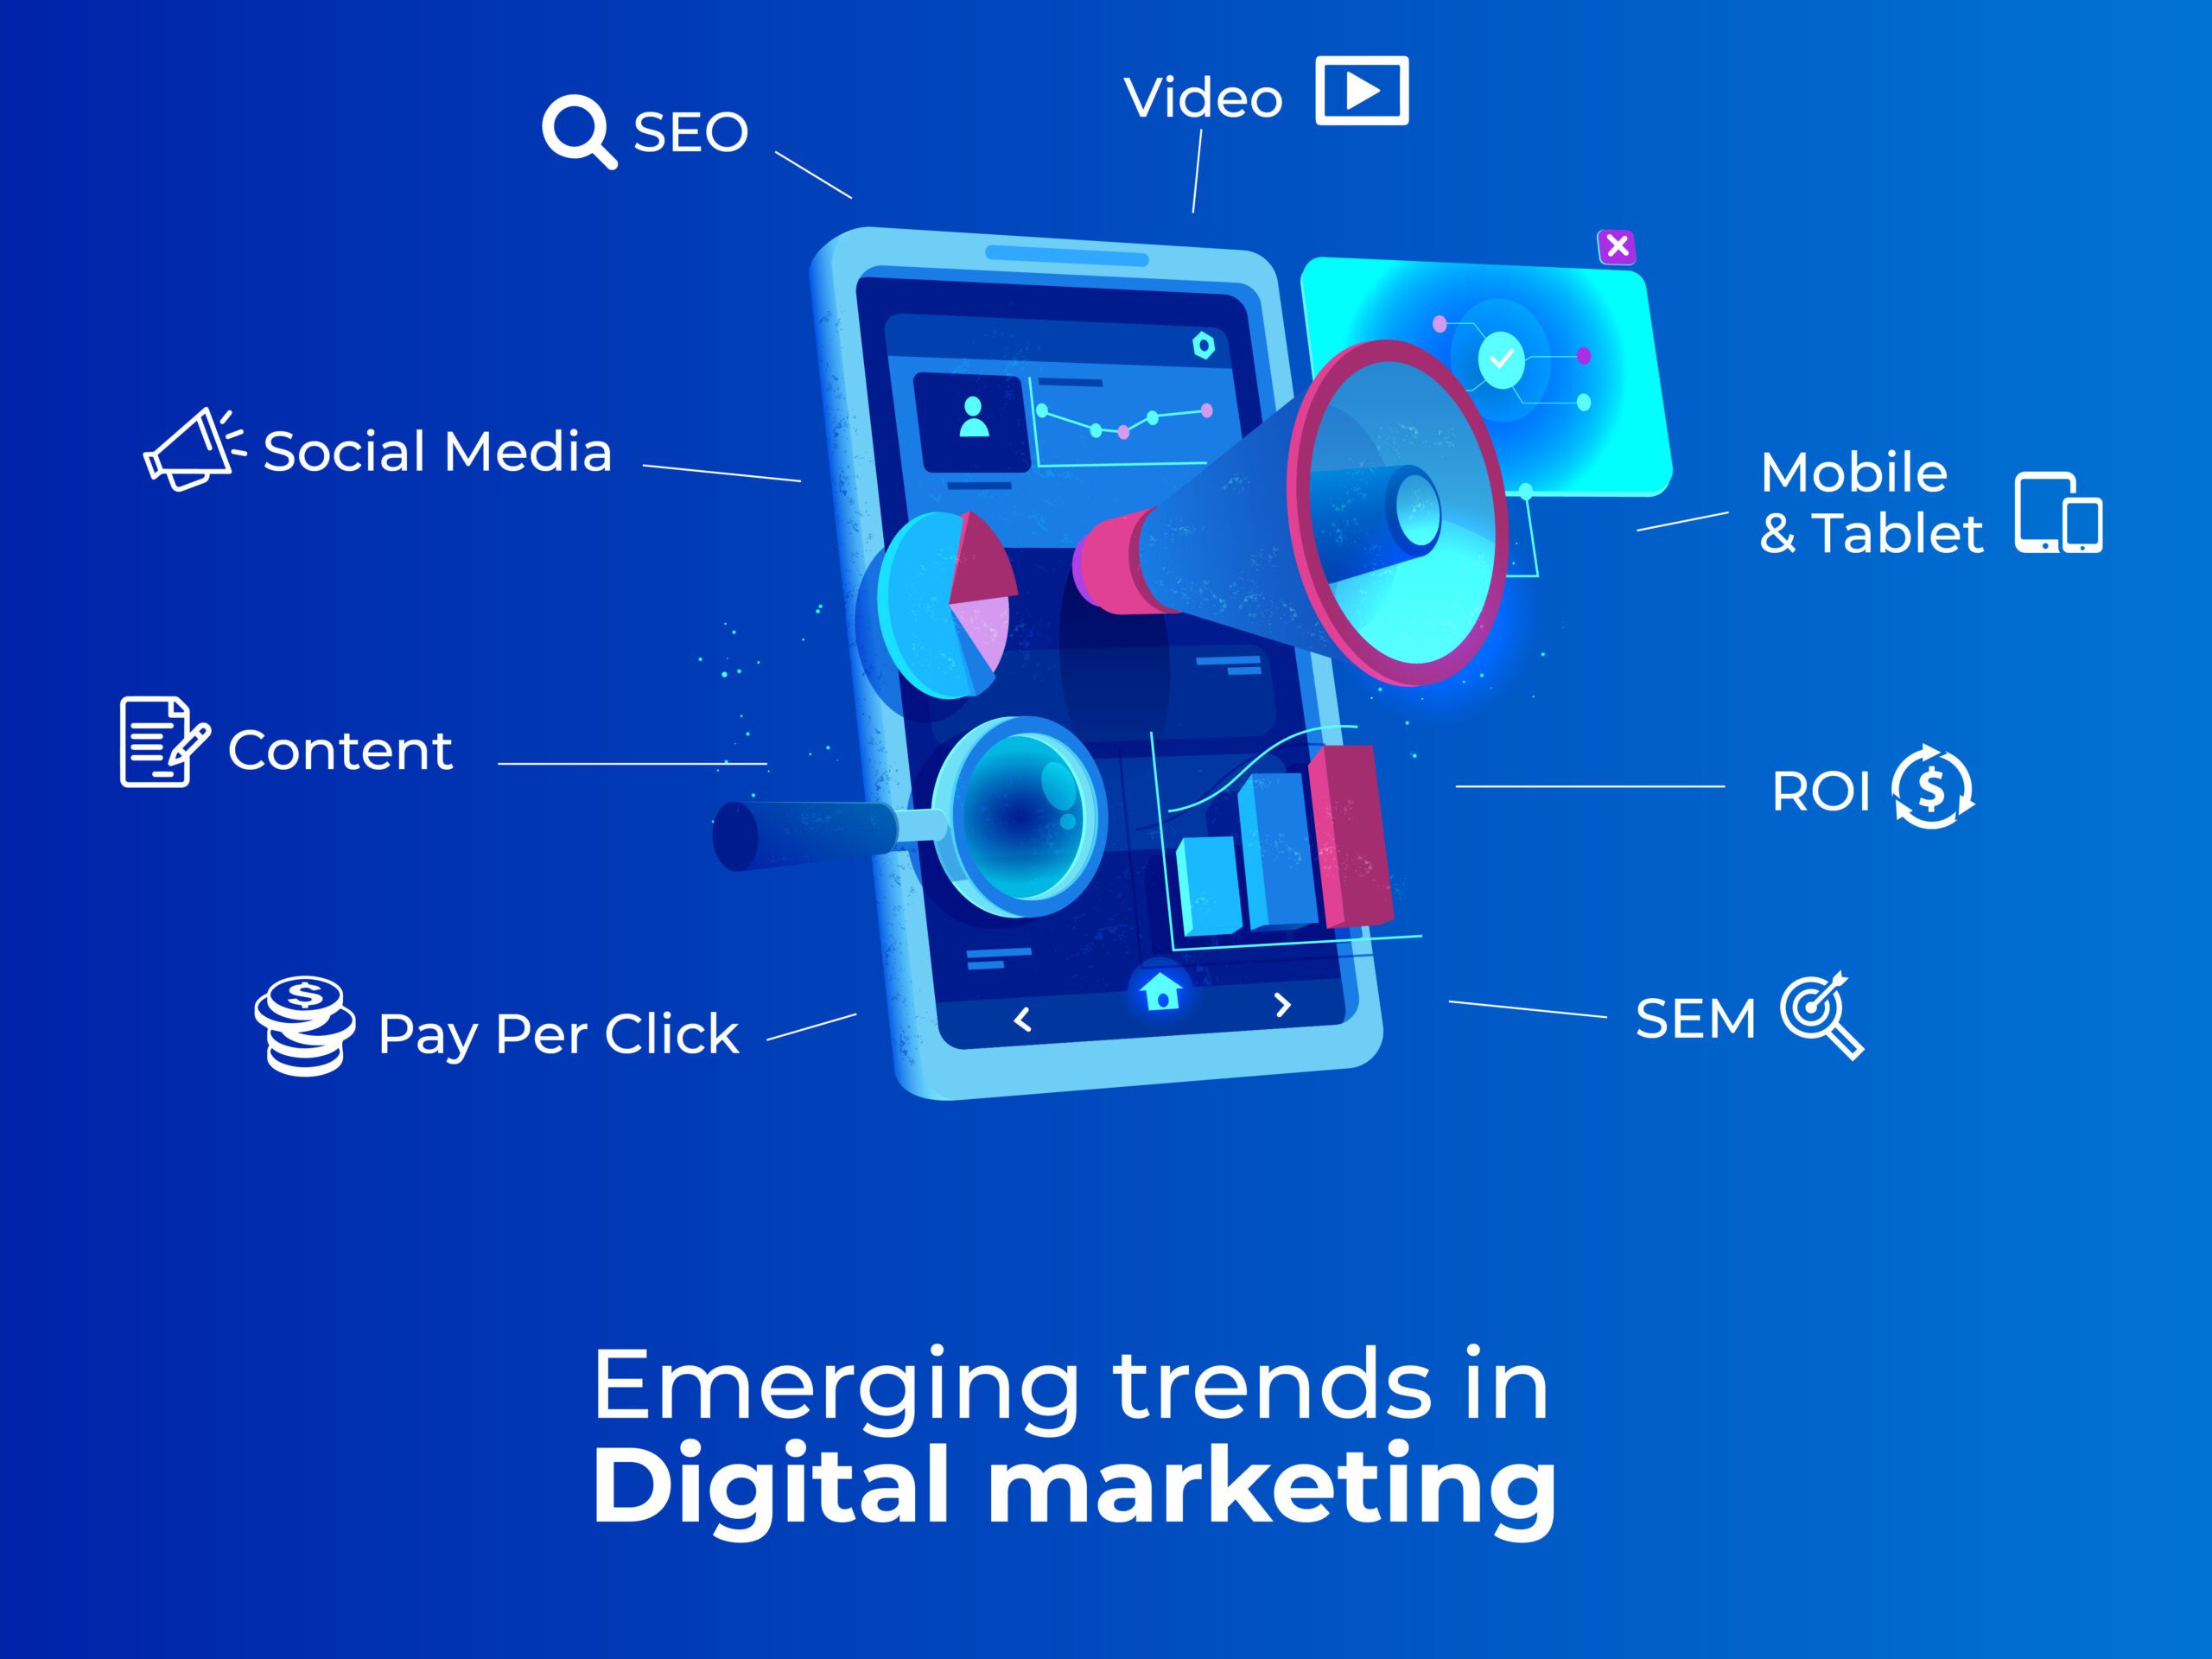 Emerging Trends in Digital Marketing Post Covid-19